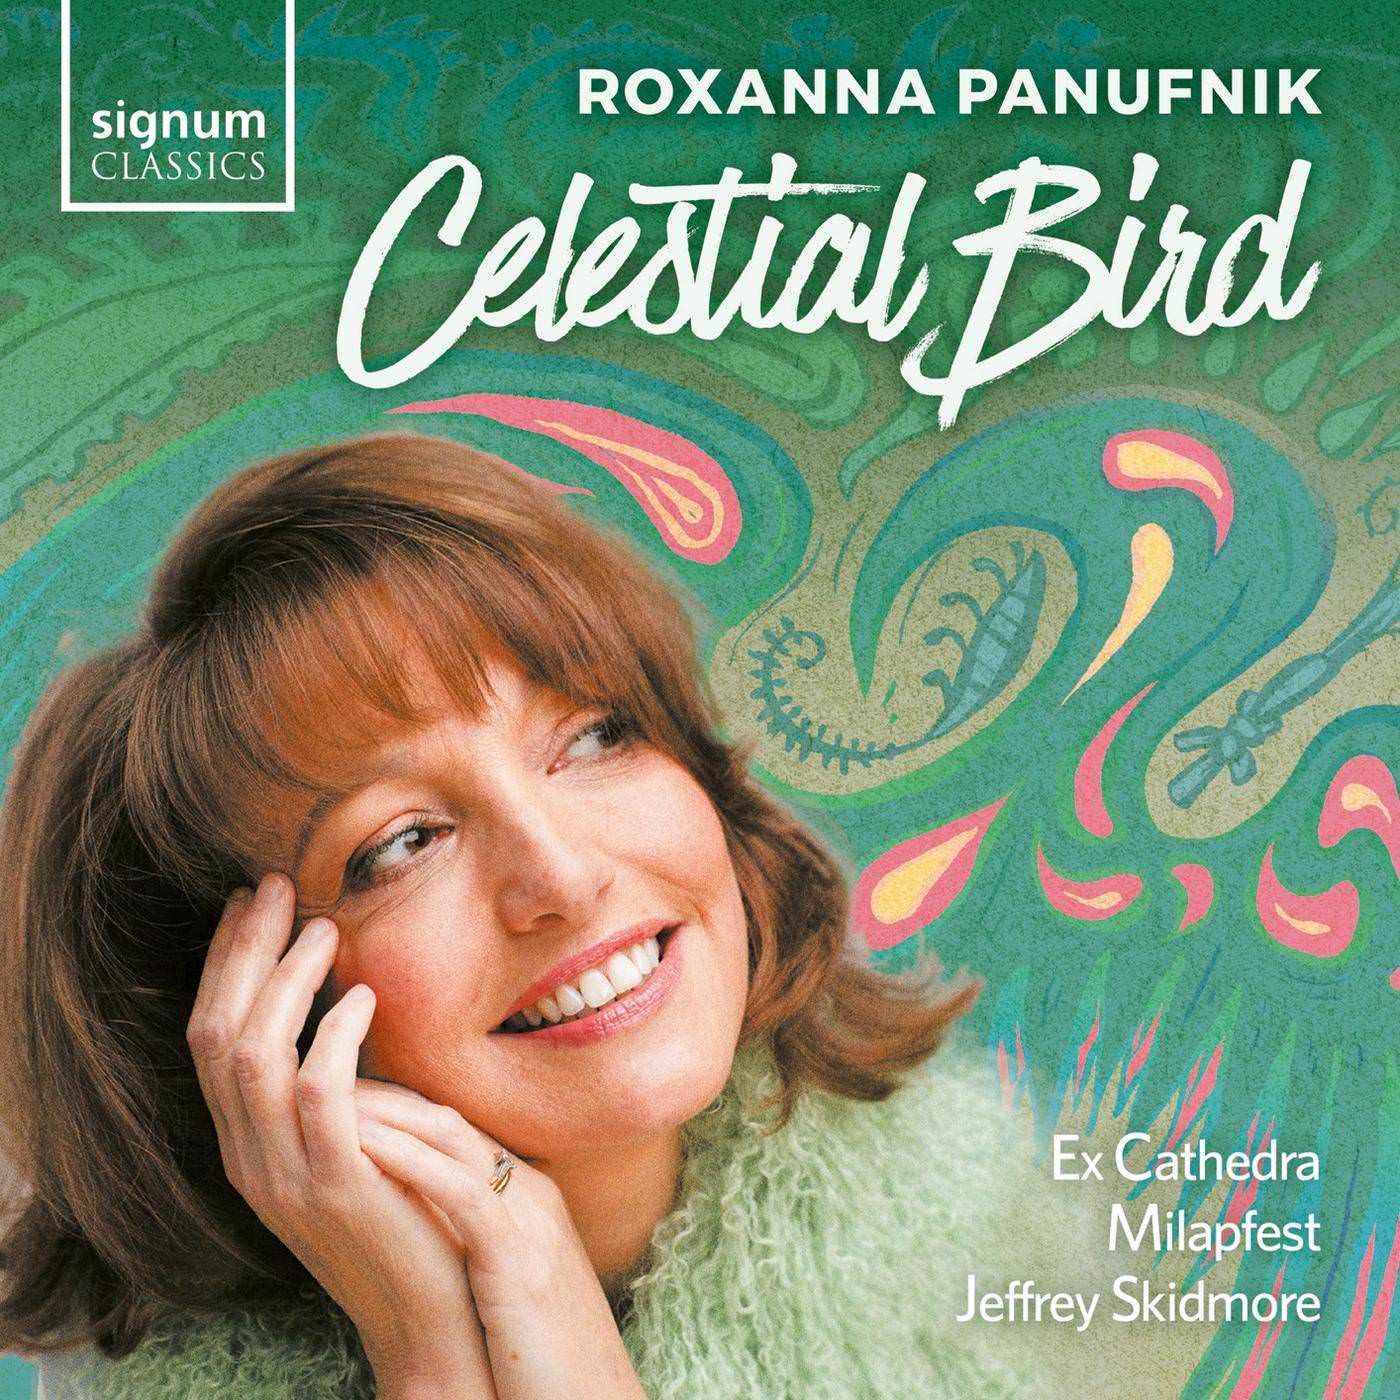 Ex Cathedra Choir & Jeffrey Skidmore – Roxanna Panufnik: Celestial Bird (2018) [FLAC 24bit/96kHz]